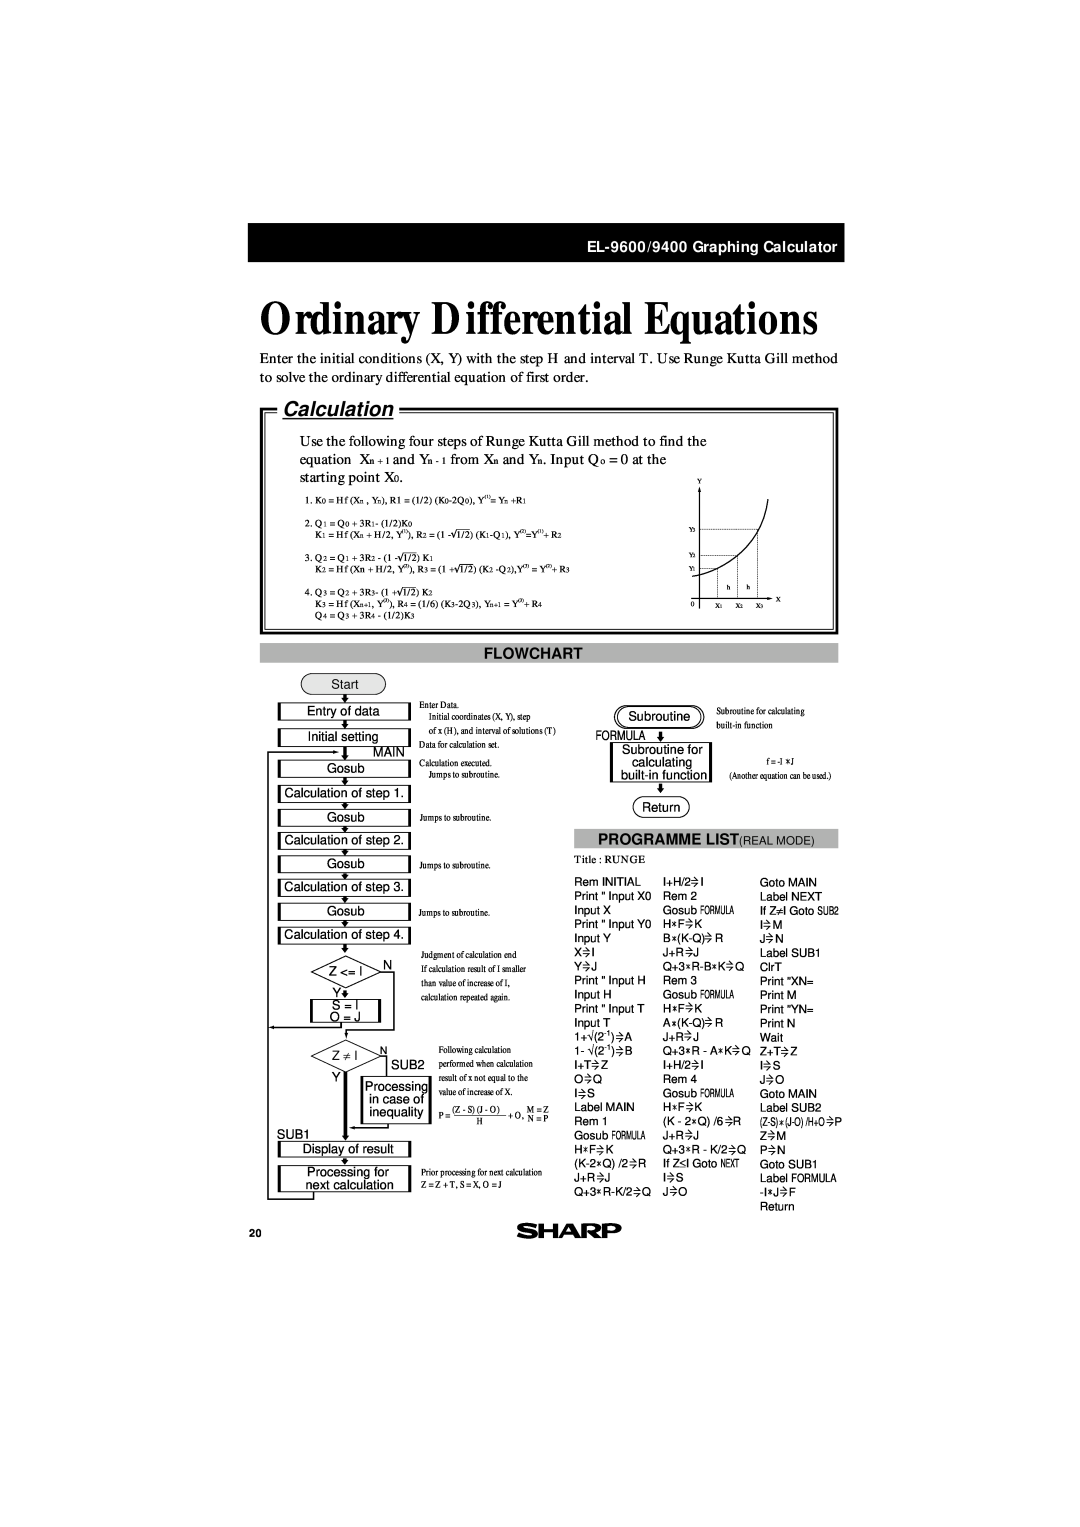 Sharp EL-9400 manual Ordinary Differential Equations, Calculation, EL-9600/9400 Graphing Calculator, Flowchart 